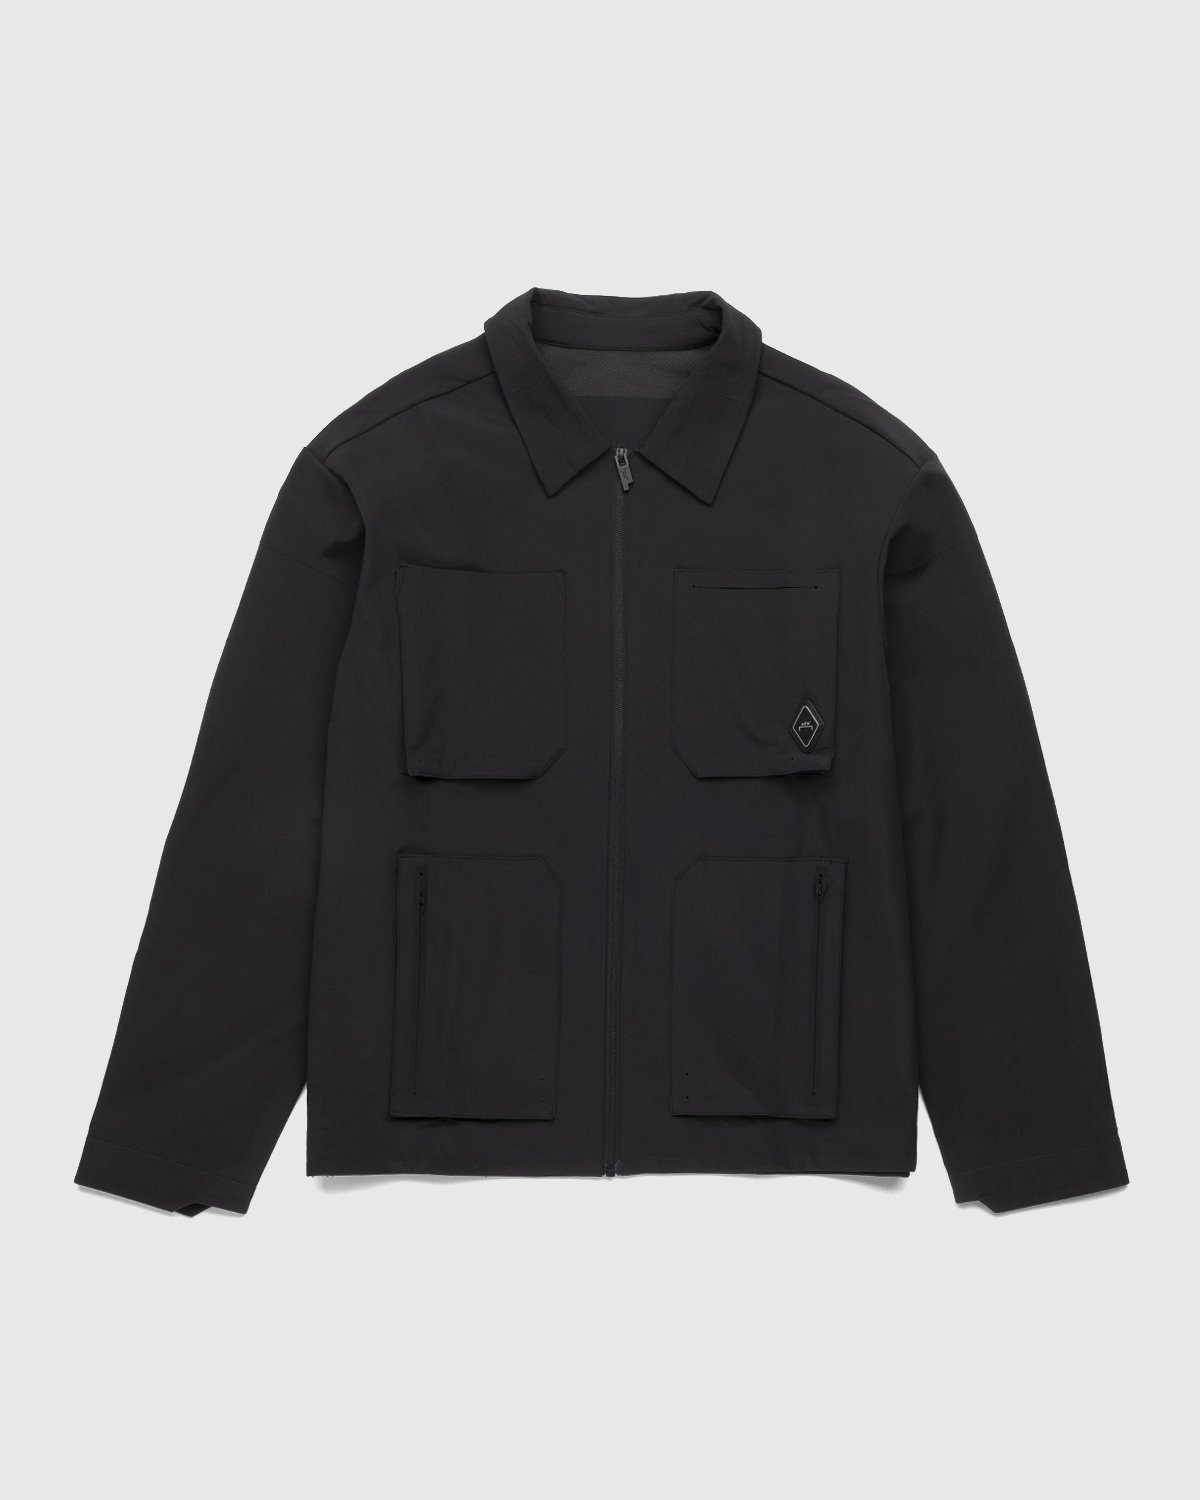 A-Cold-Wall* – Technical Overshirt Black | Highsnobiety Shop